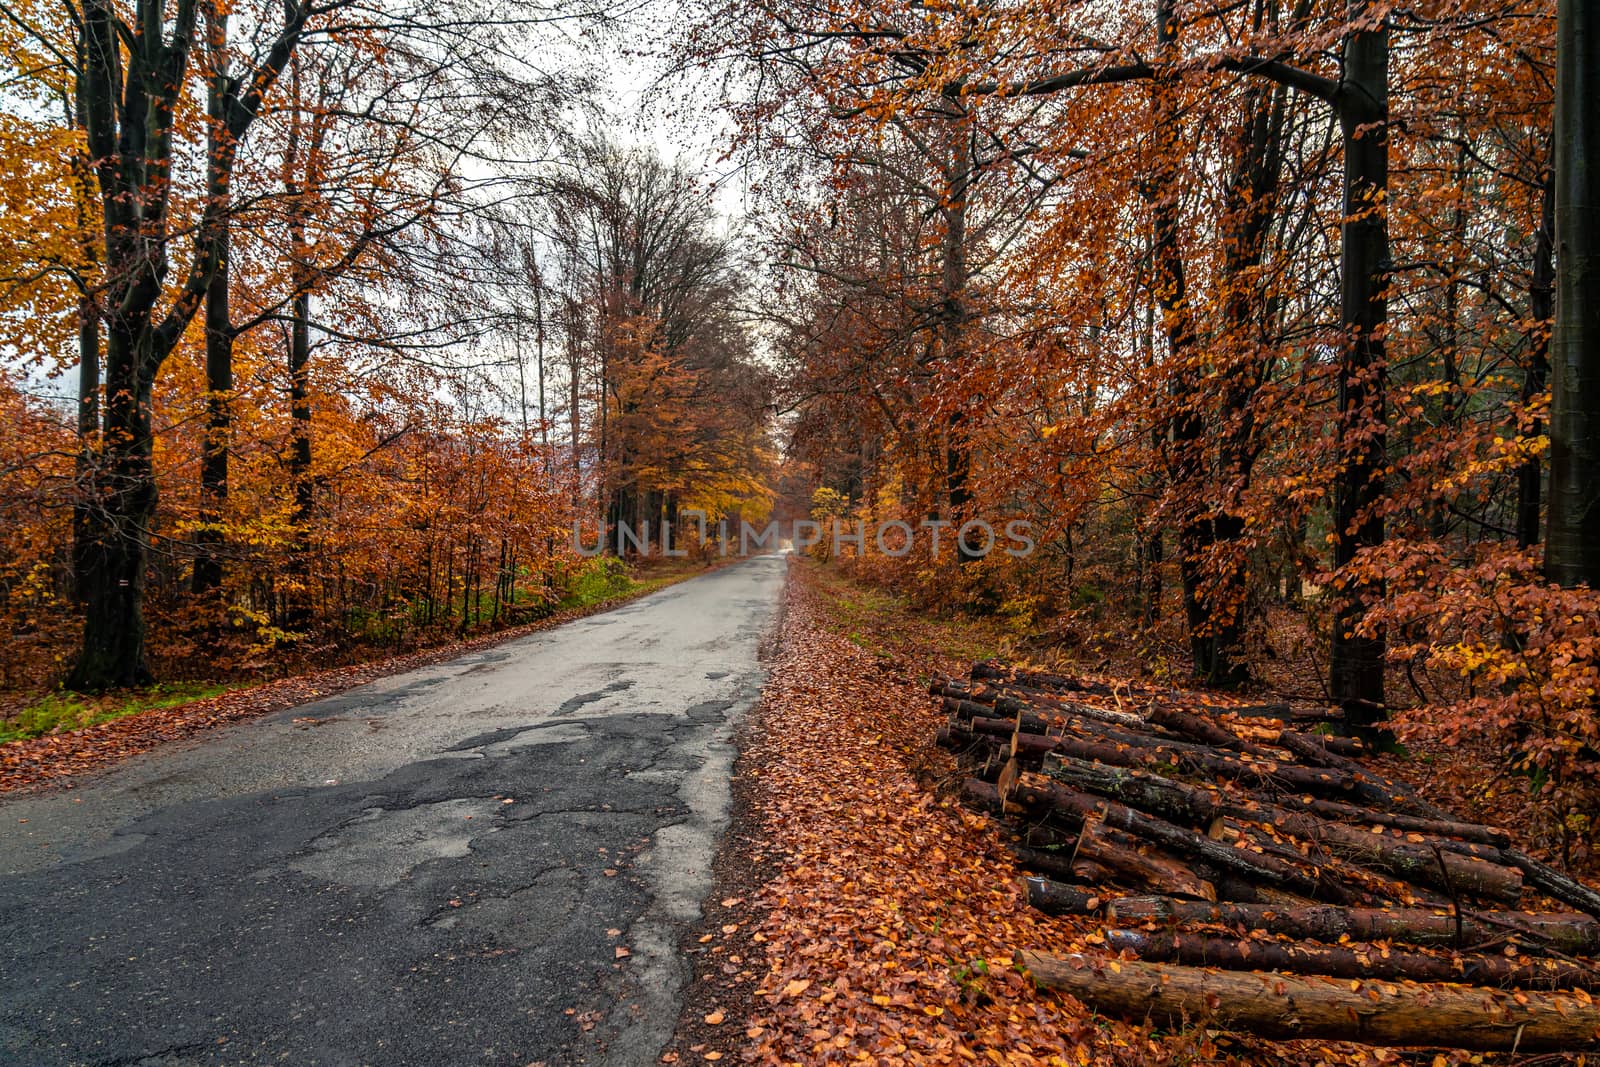 asphalt road in the orange autumn forest by Edophoto